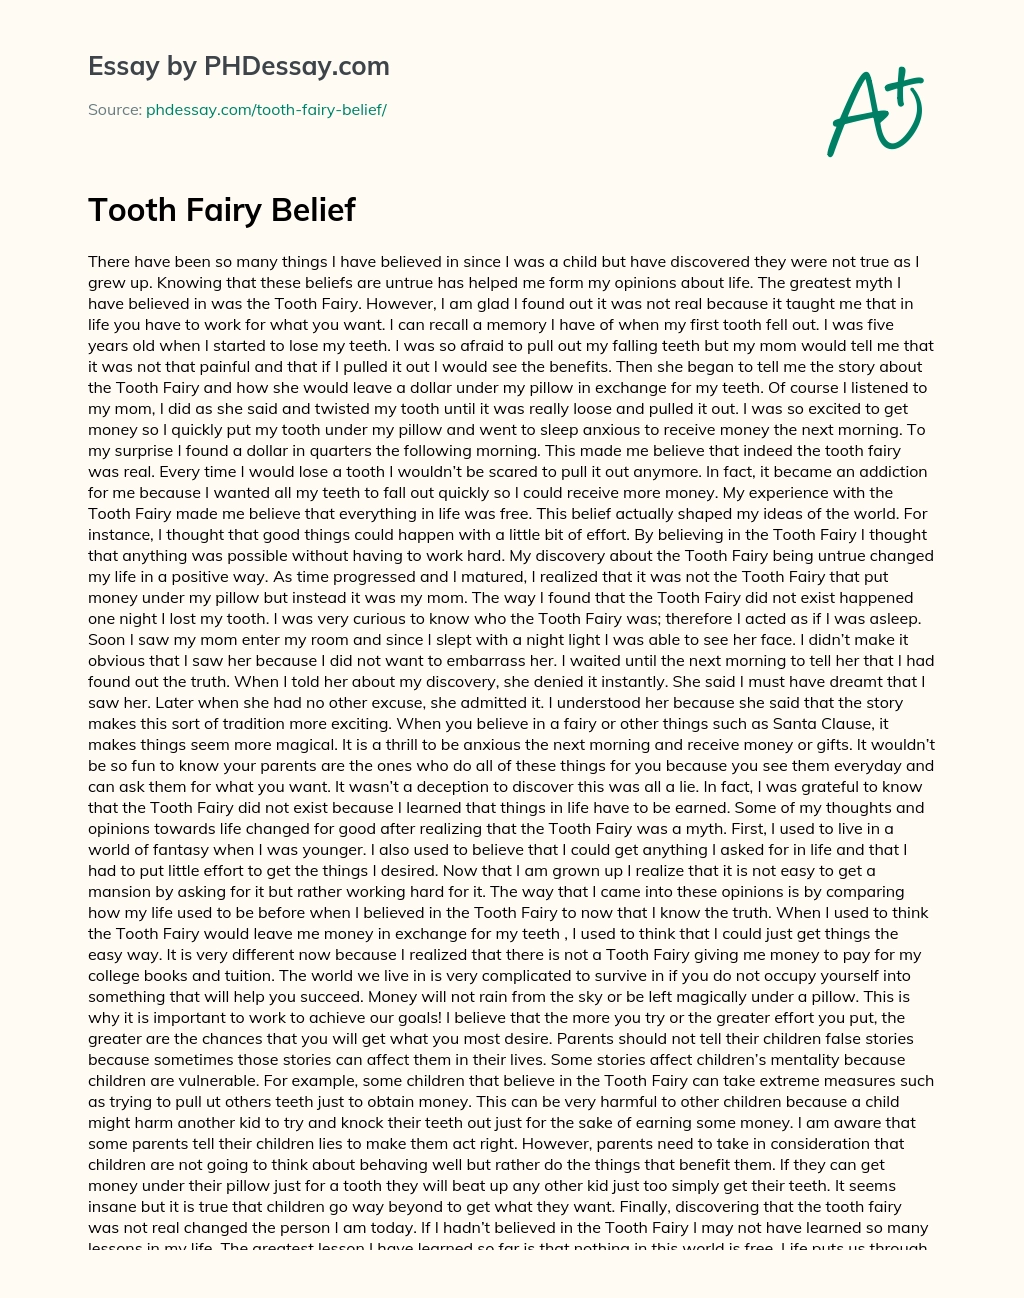 Tooth Fairy Belief essay